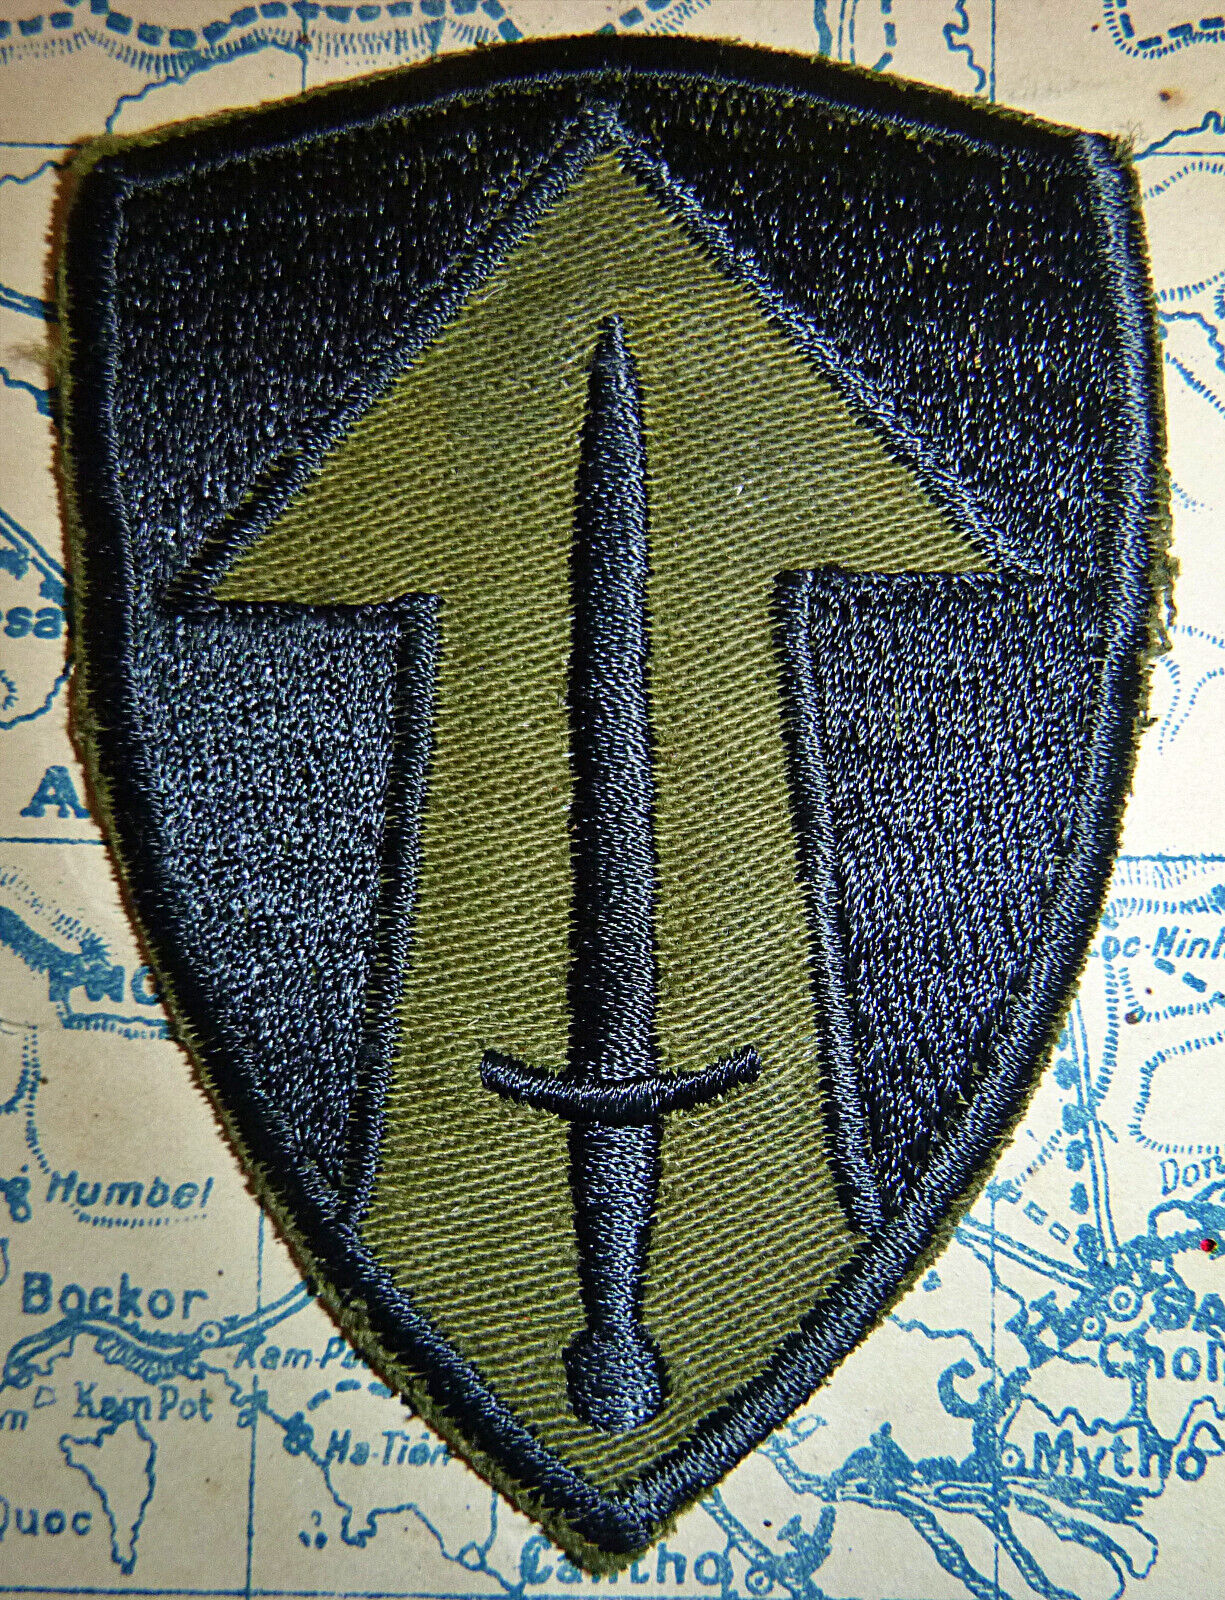 Original Subdued Patch - FIELD FORCE II - SAIGON, Long Binh, Vietnam War - M.583